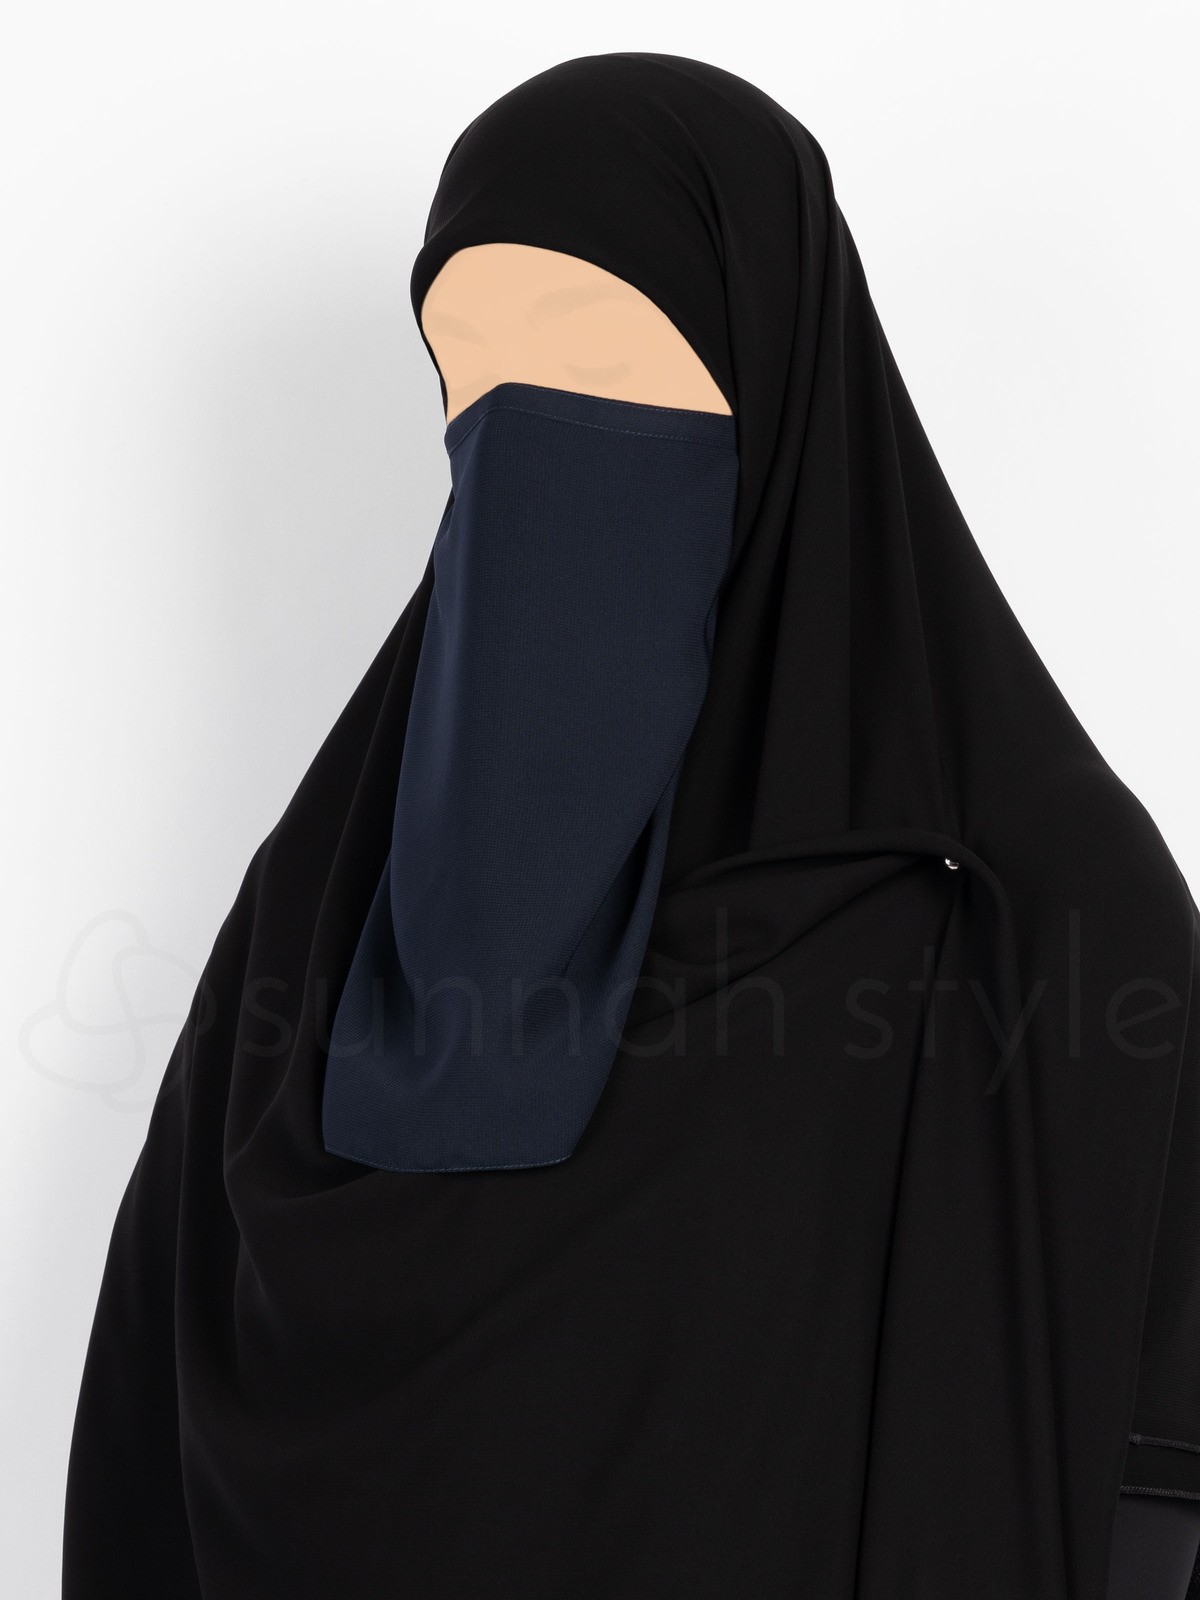 Sunnah Style - Tying Half Niqab (Black)